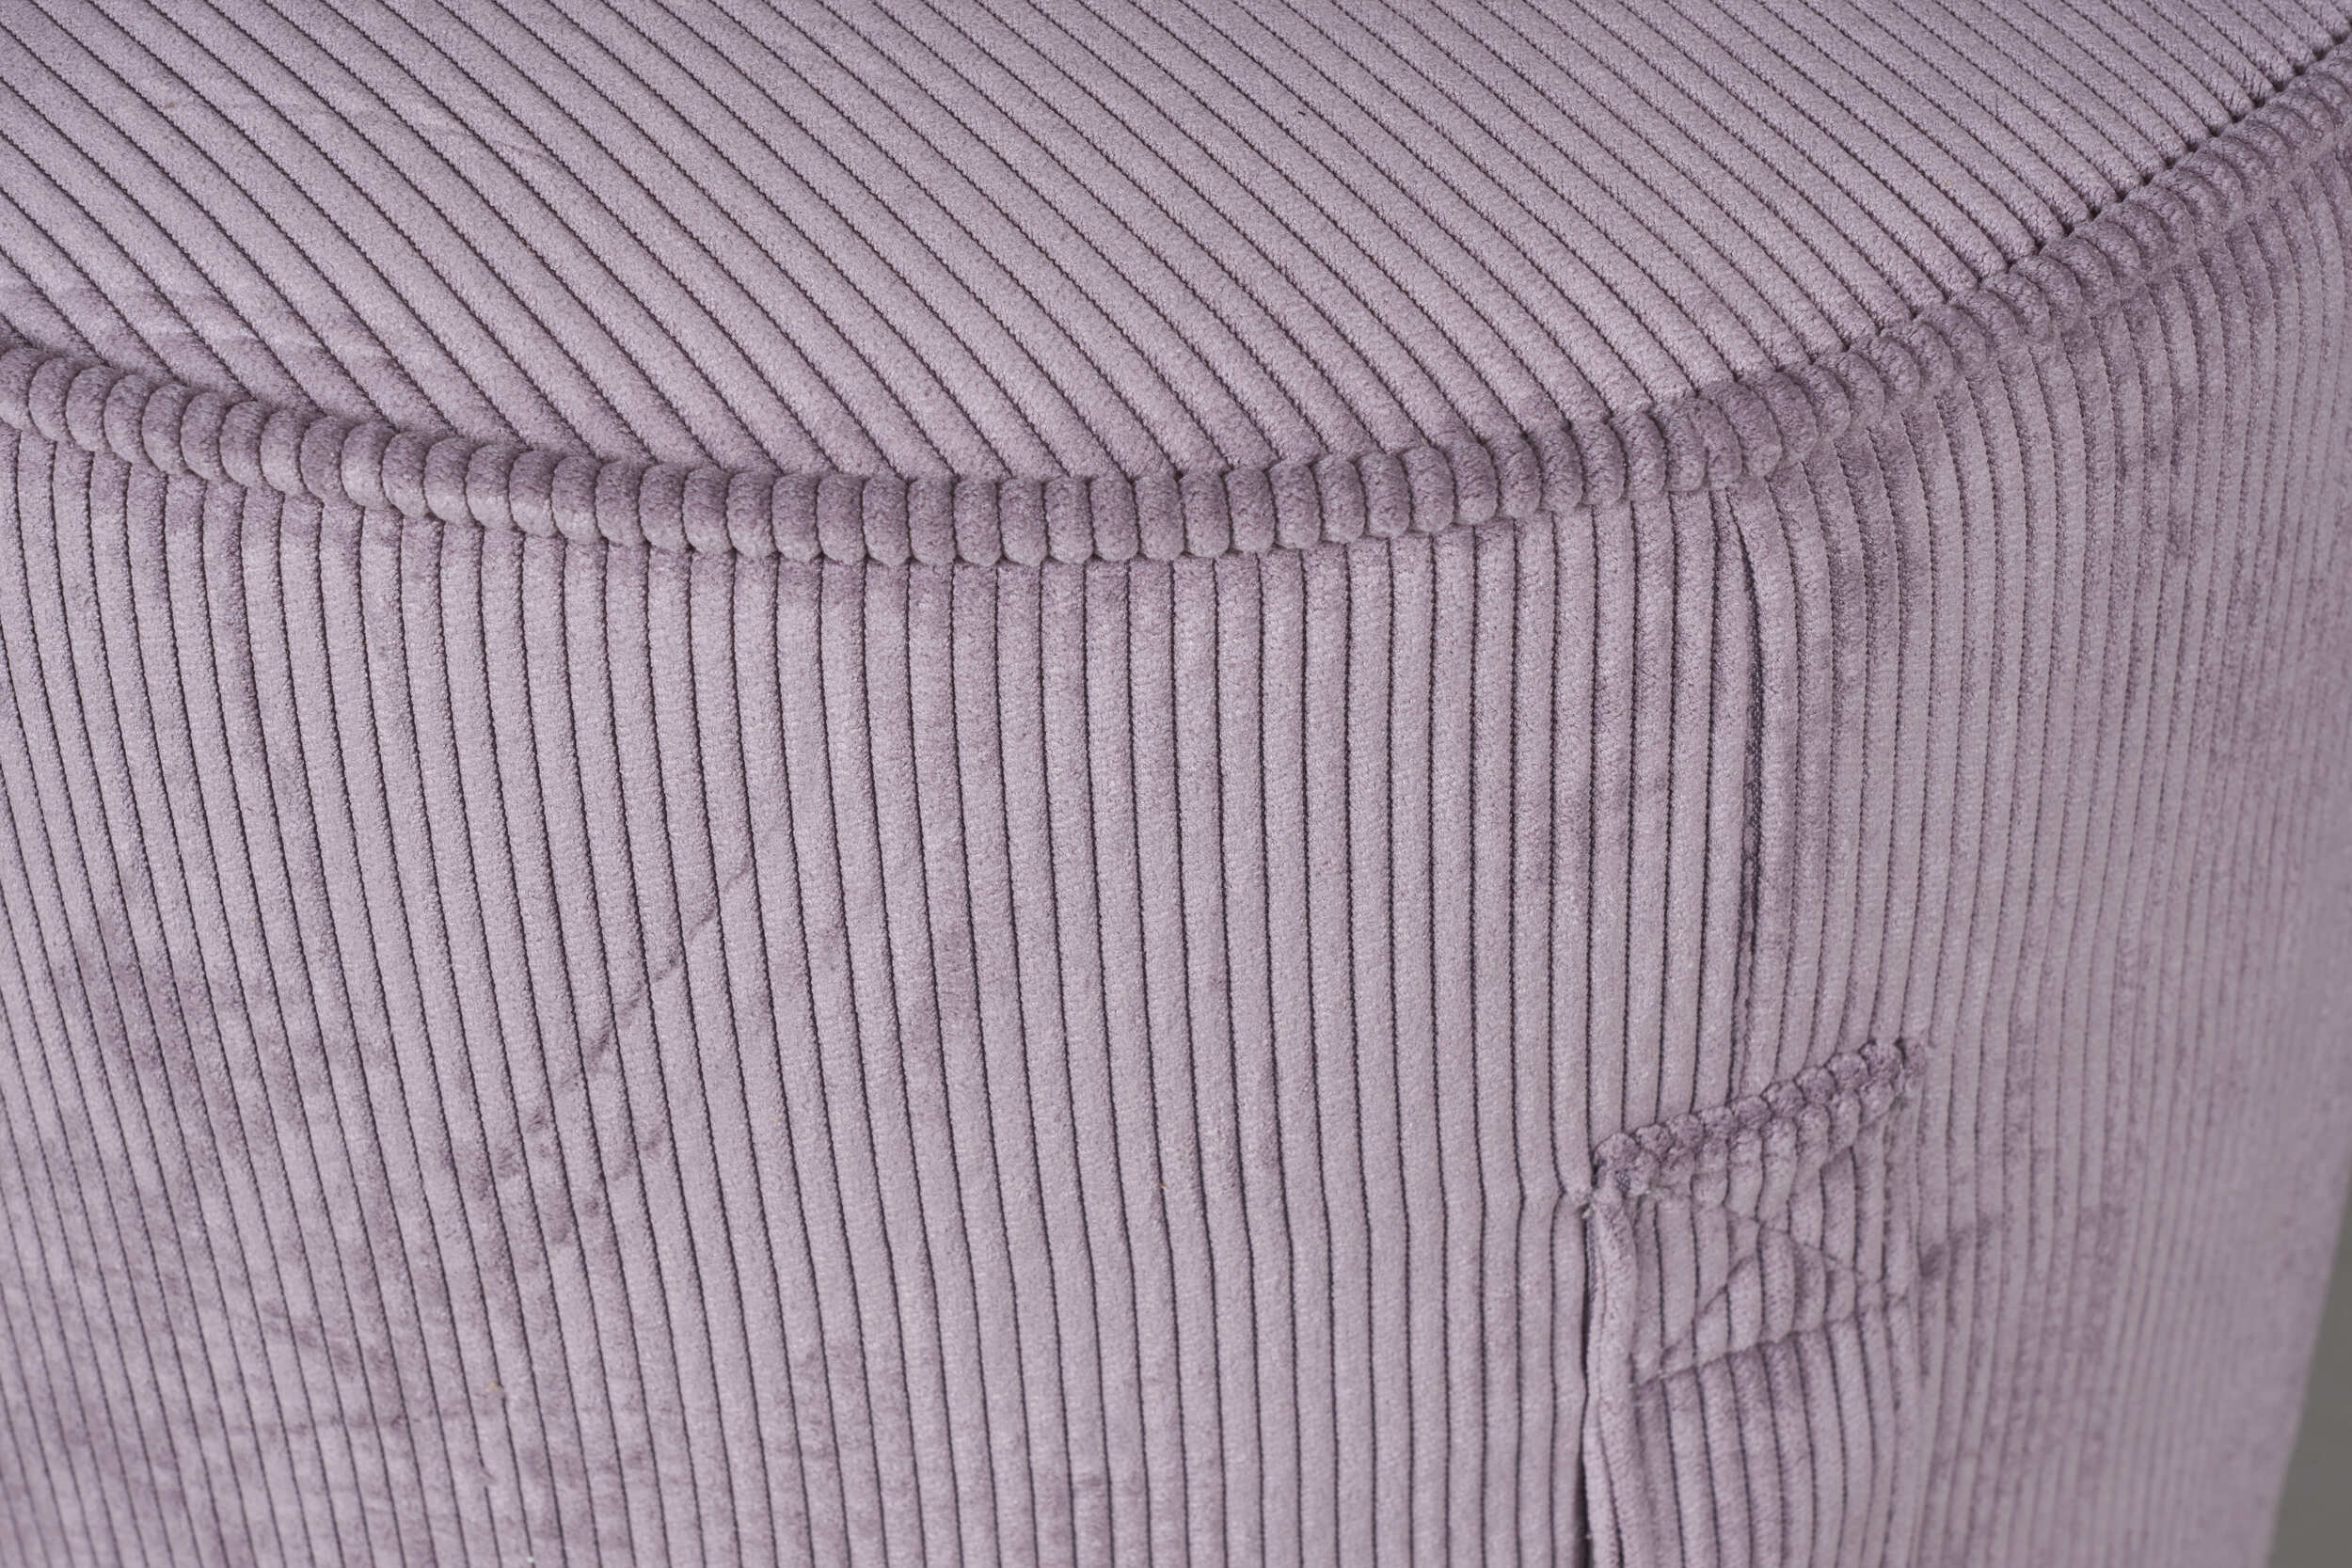 LC Home Sitzhocker »Dalia« rund inkl. Griff Cordoptik lavendel Ø41x44 cm